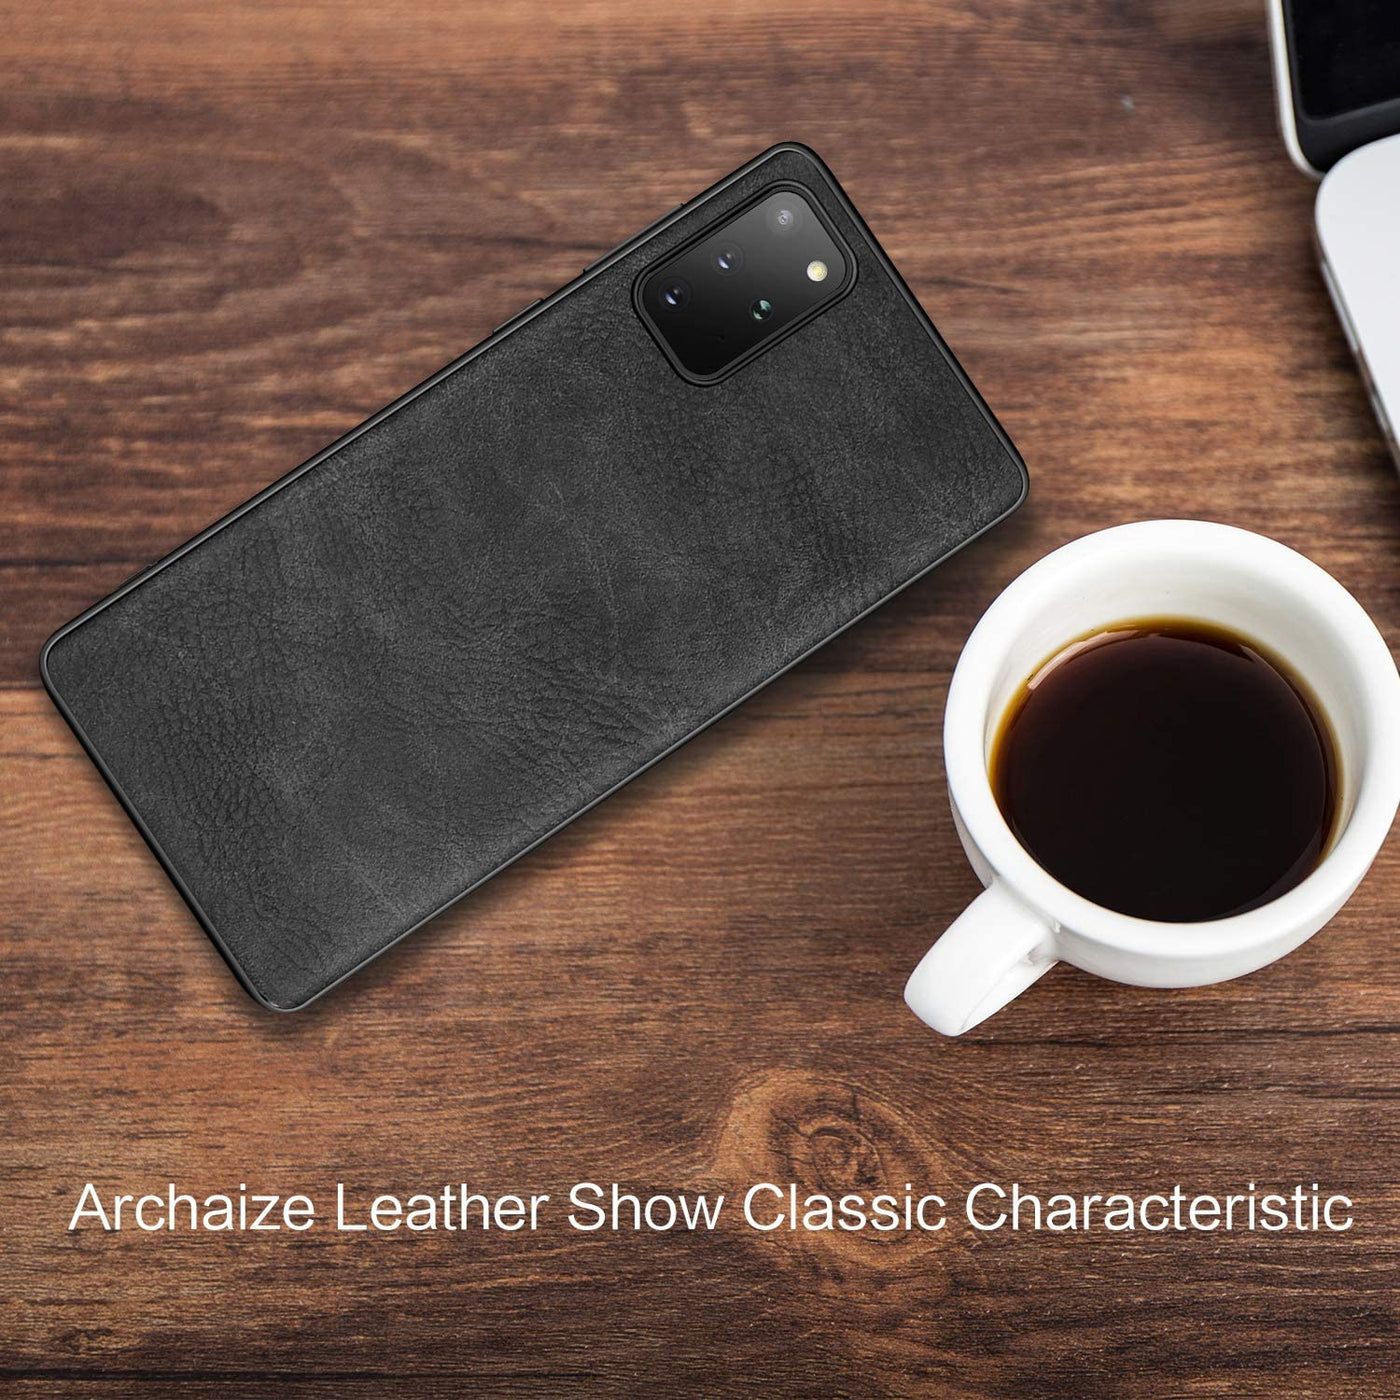 Samsung Galaxy S20 Plus high quality unique designer leather case cover